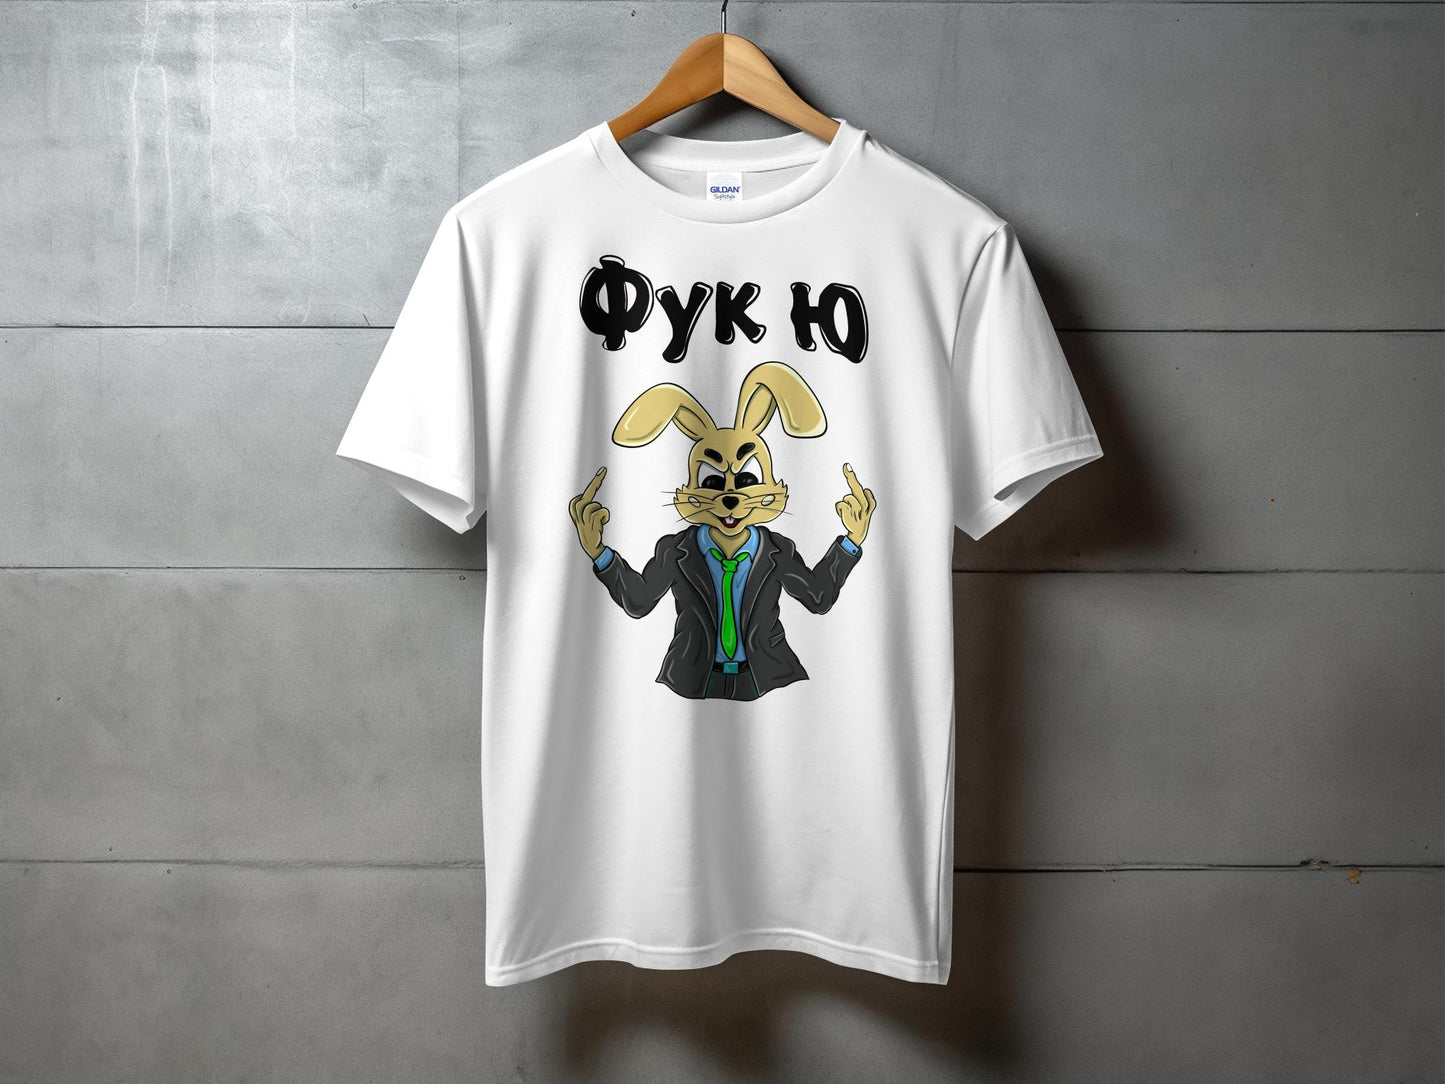 #Фук ю заяц T-shirt Oversize